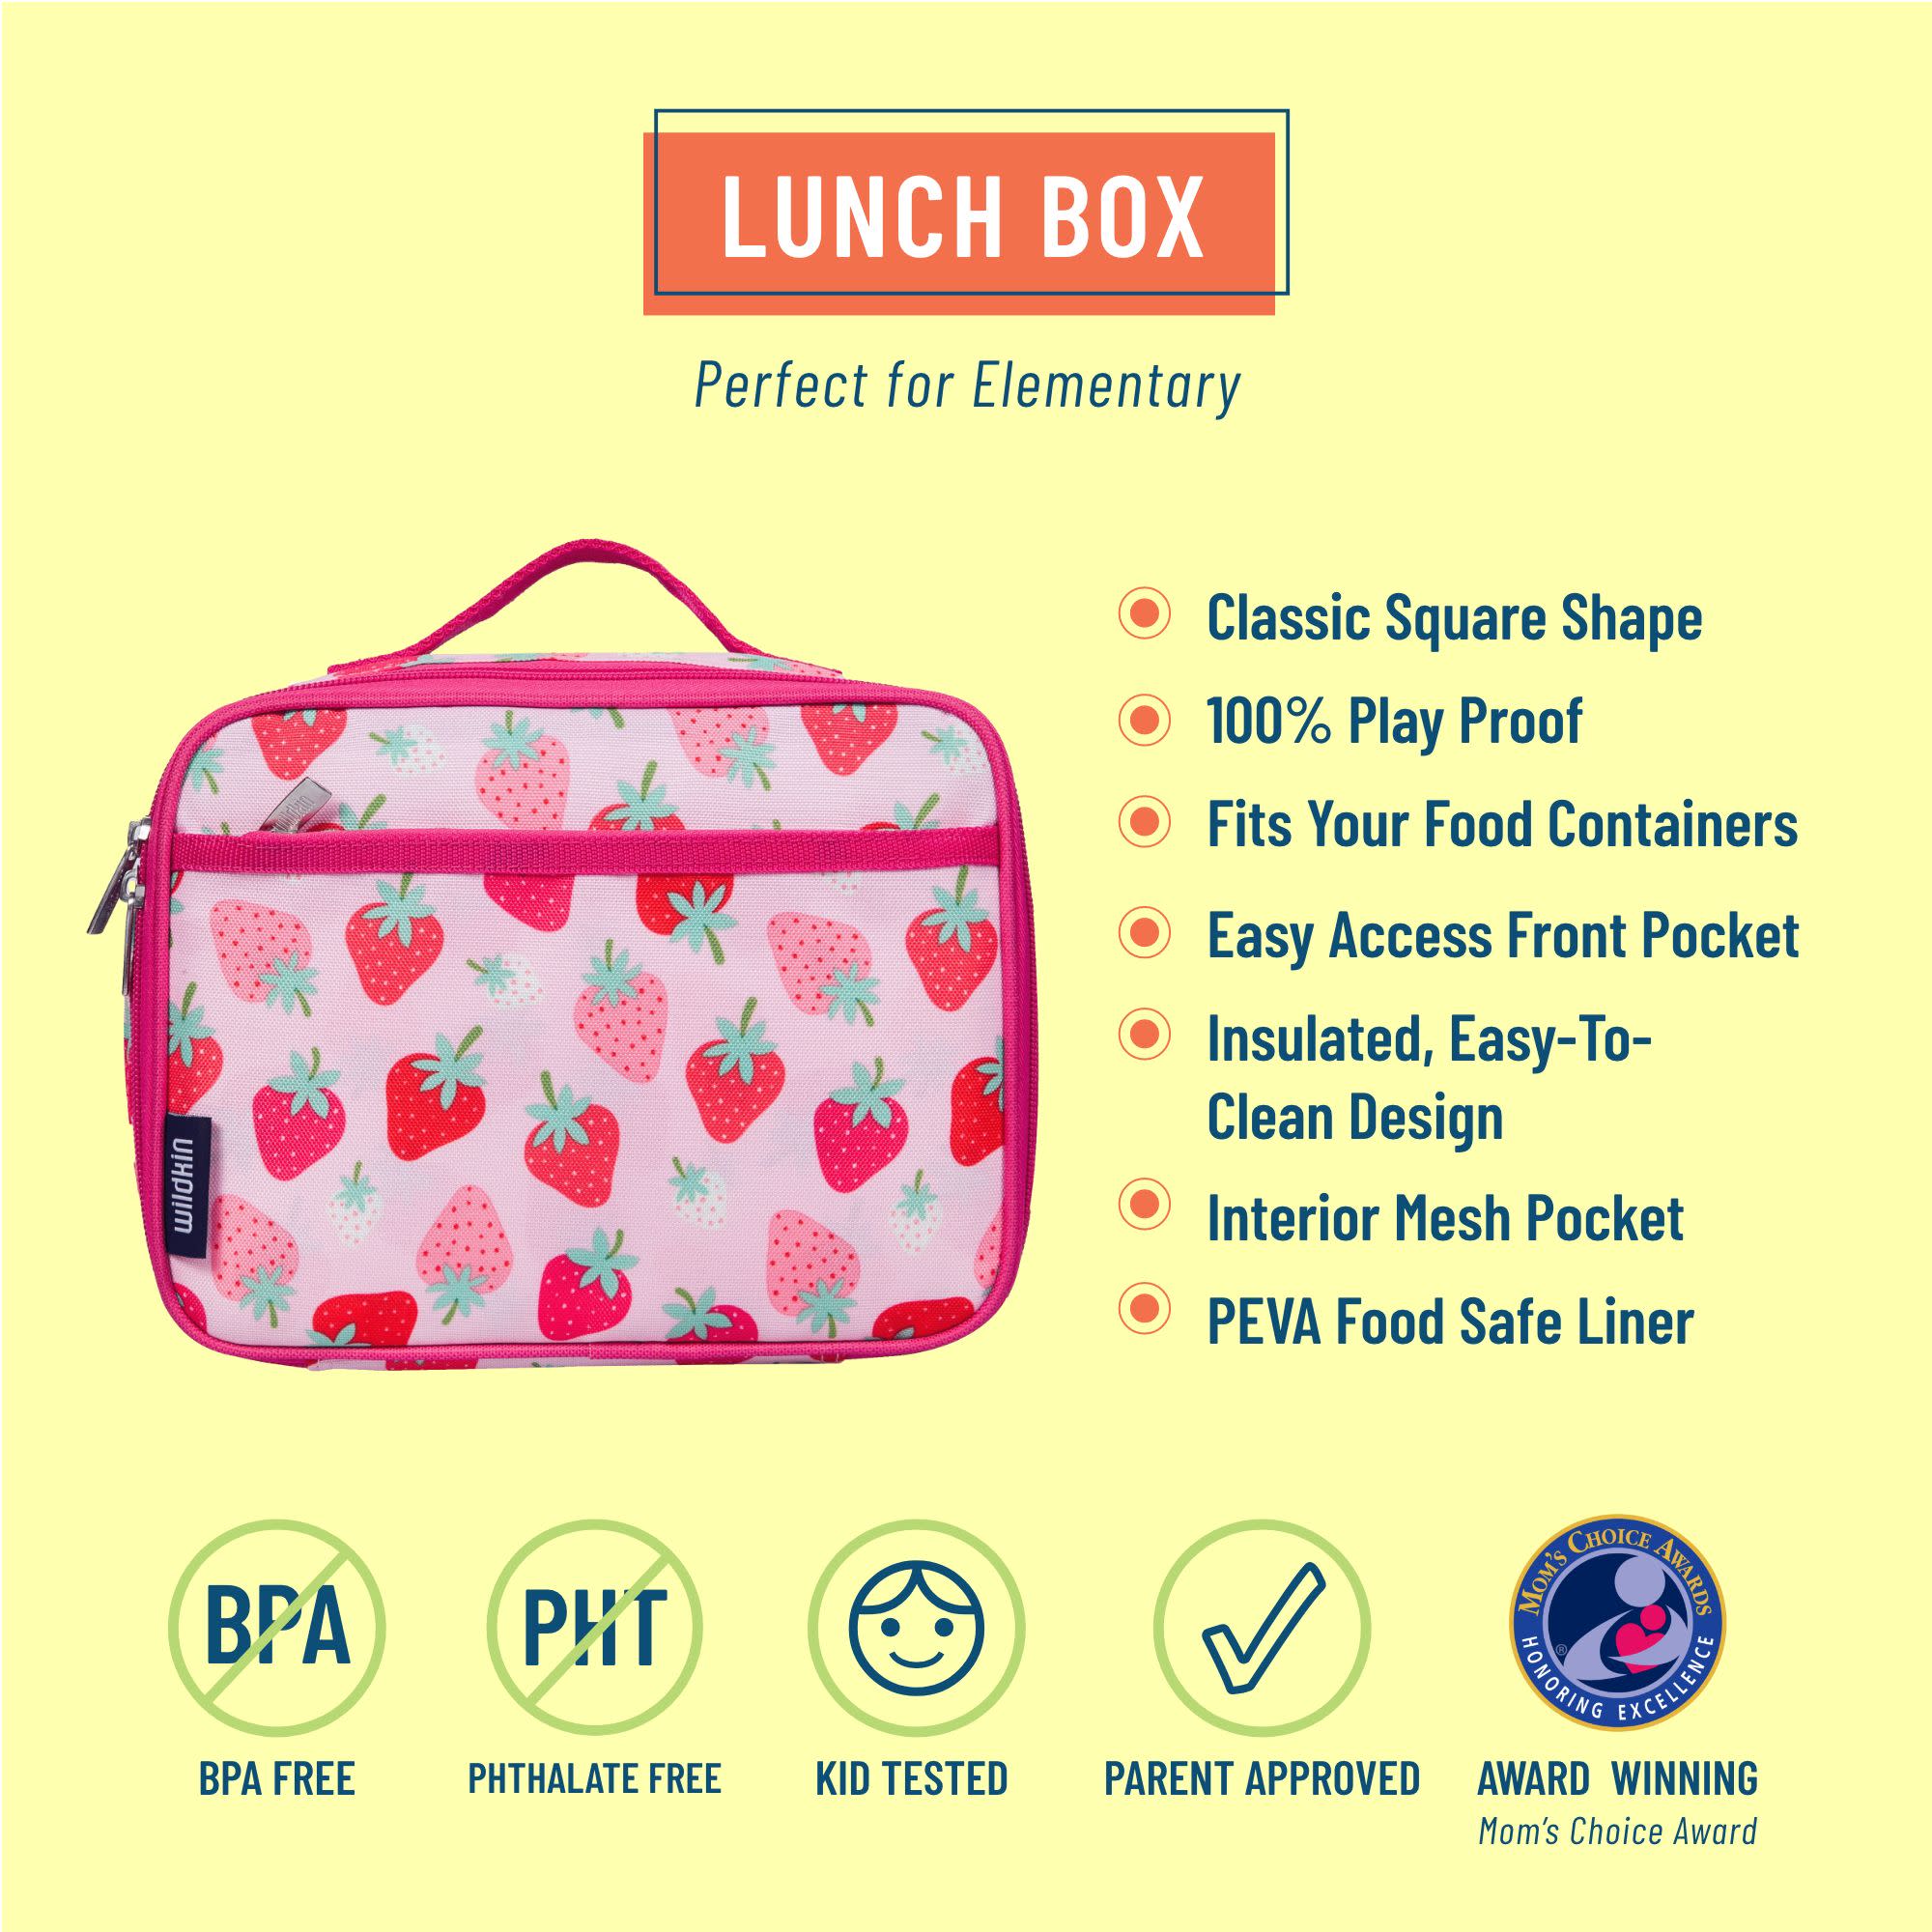 Wildkin Rainbow Hearts Lunch Box